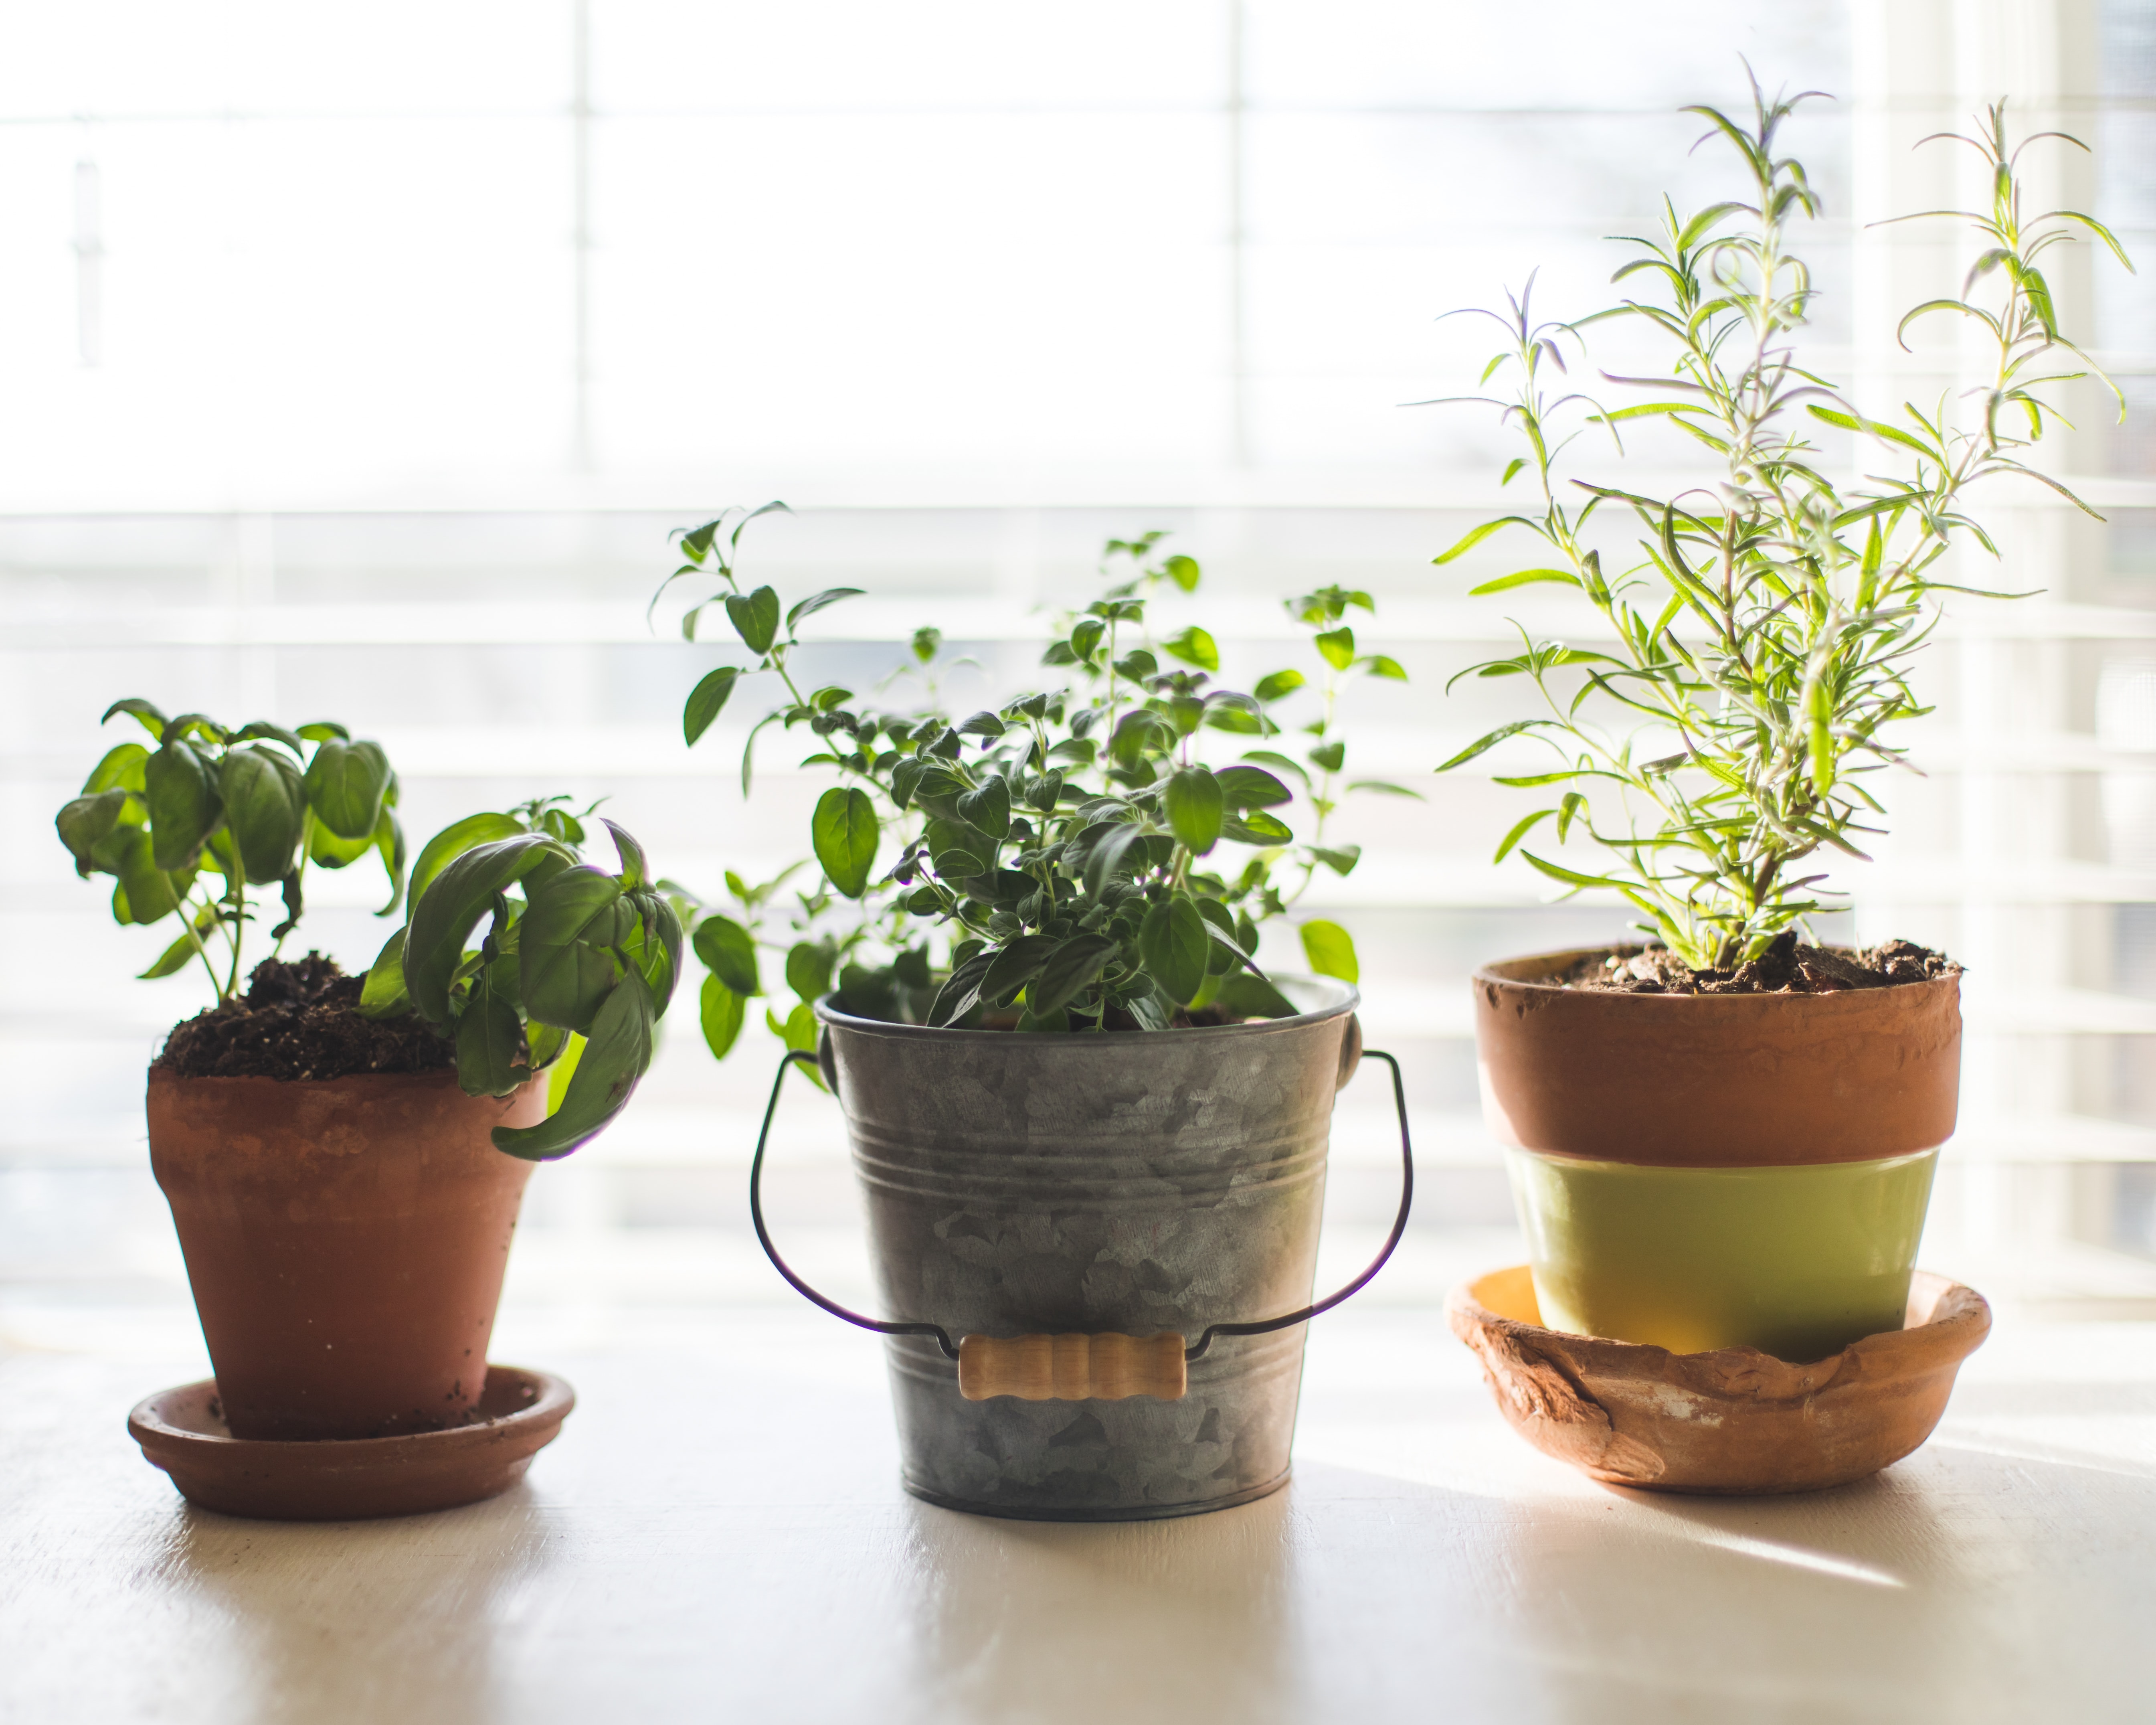 Three potted plants by a window; image by Carolyn V., via Unsplash.com.